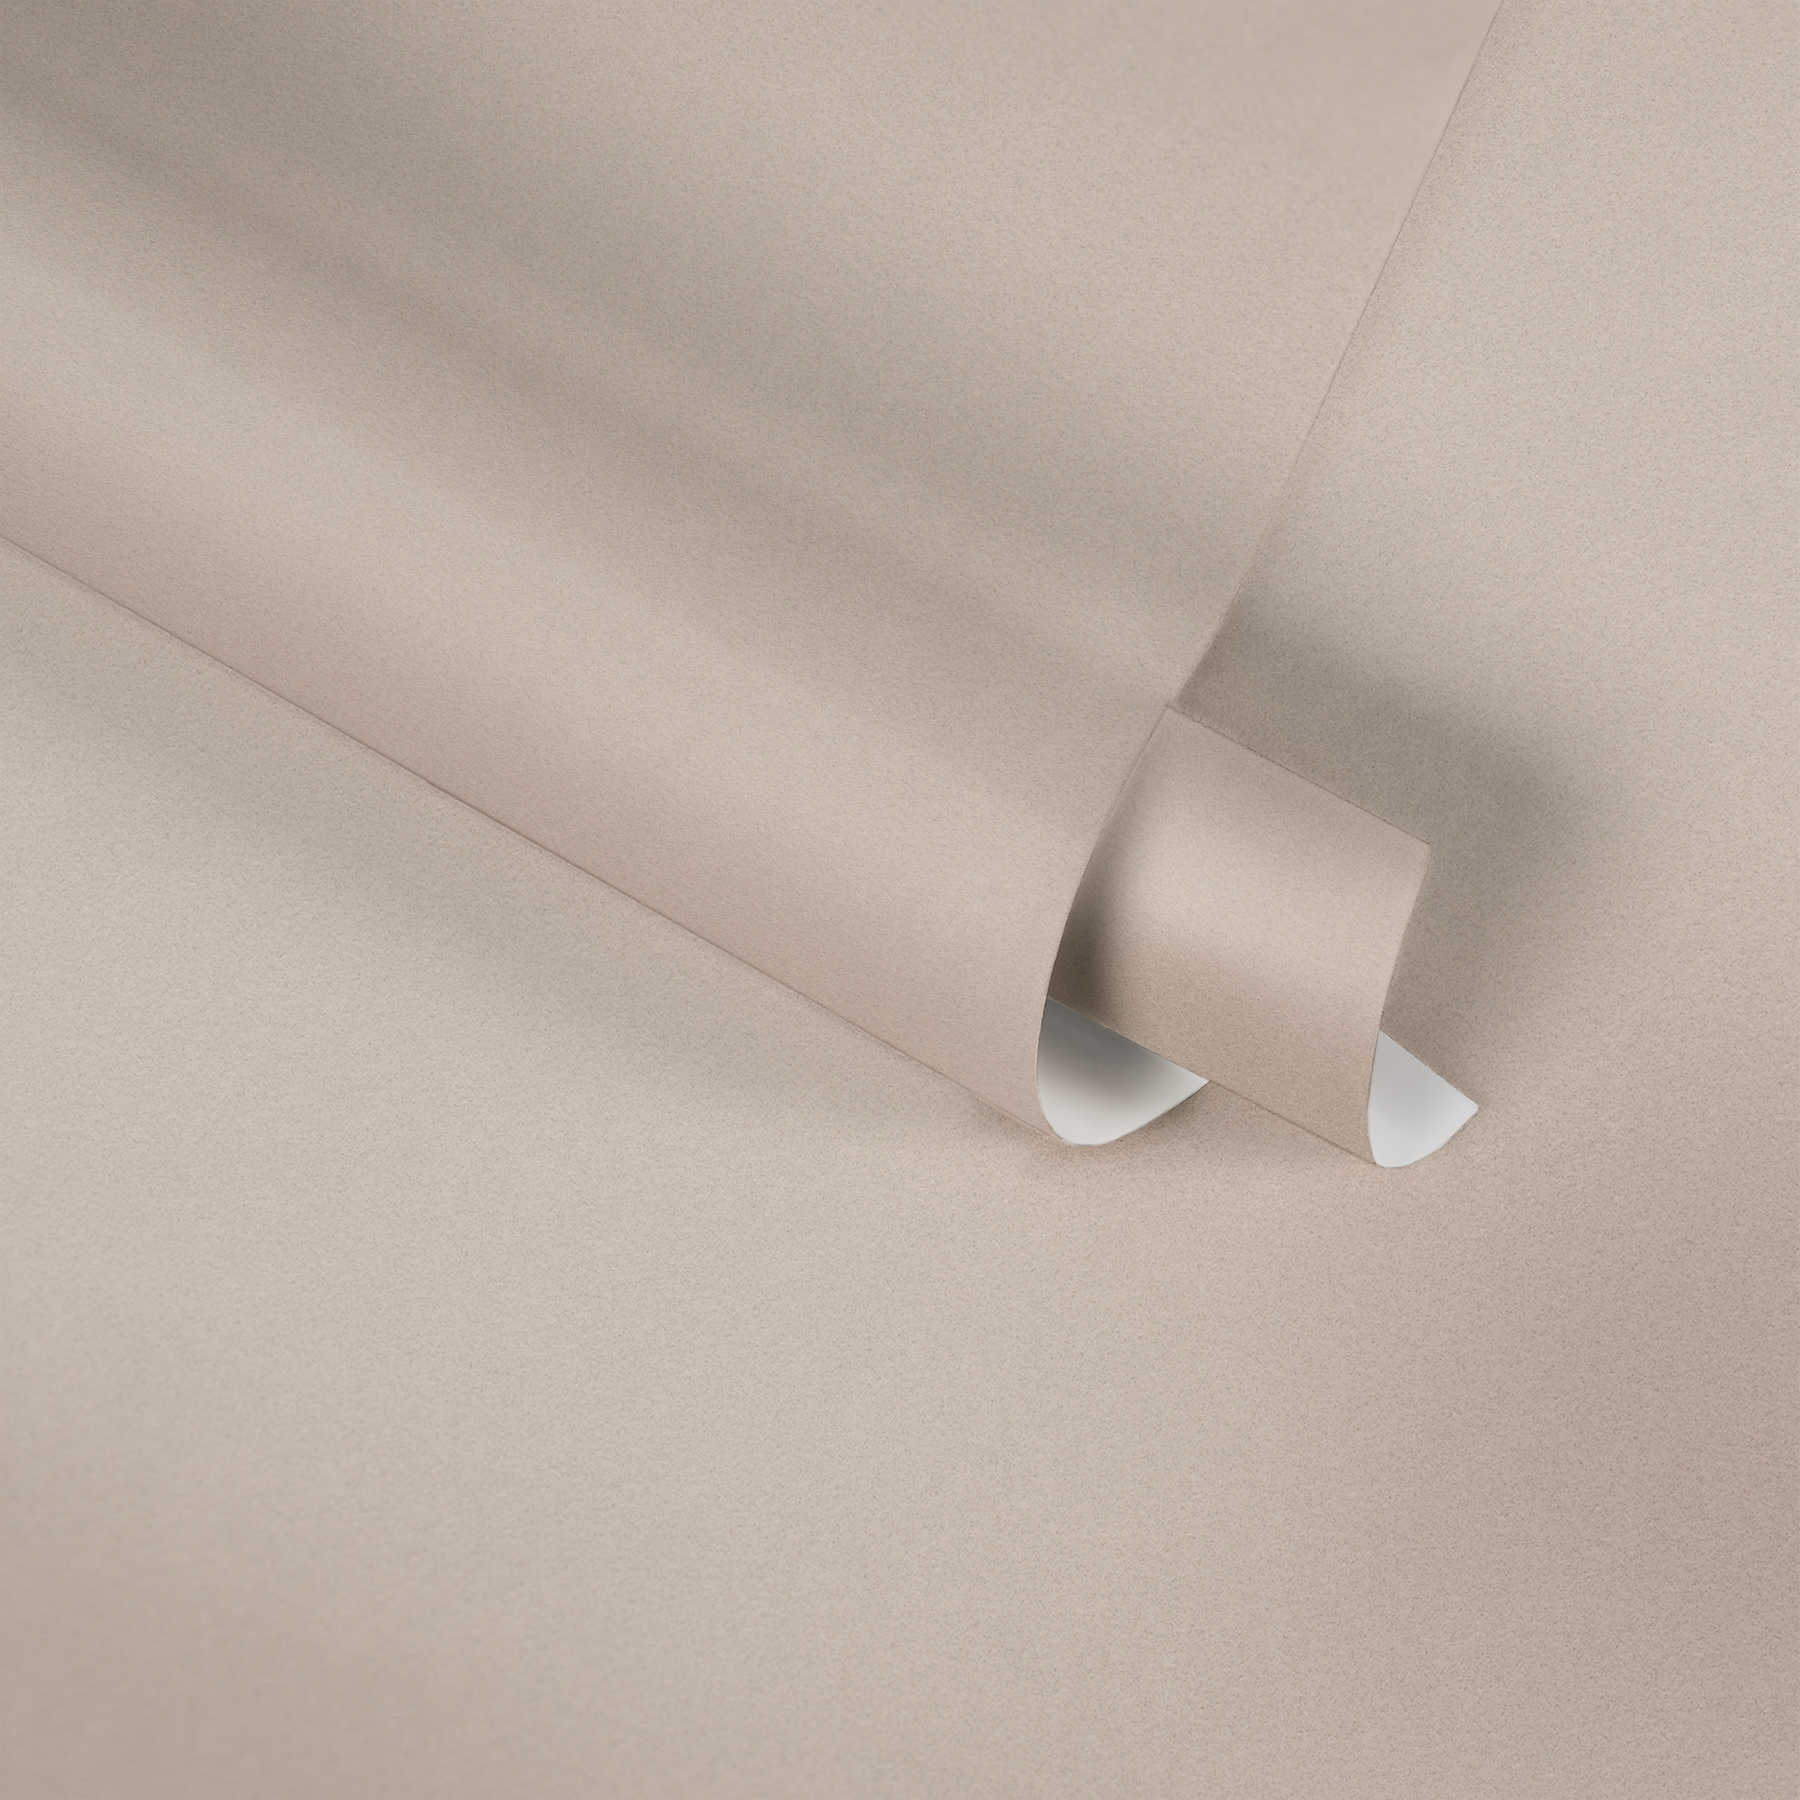             Neutral non-woven wallpaper plain, matte & warm - beige
        